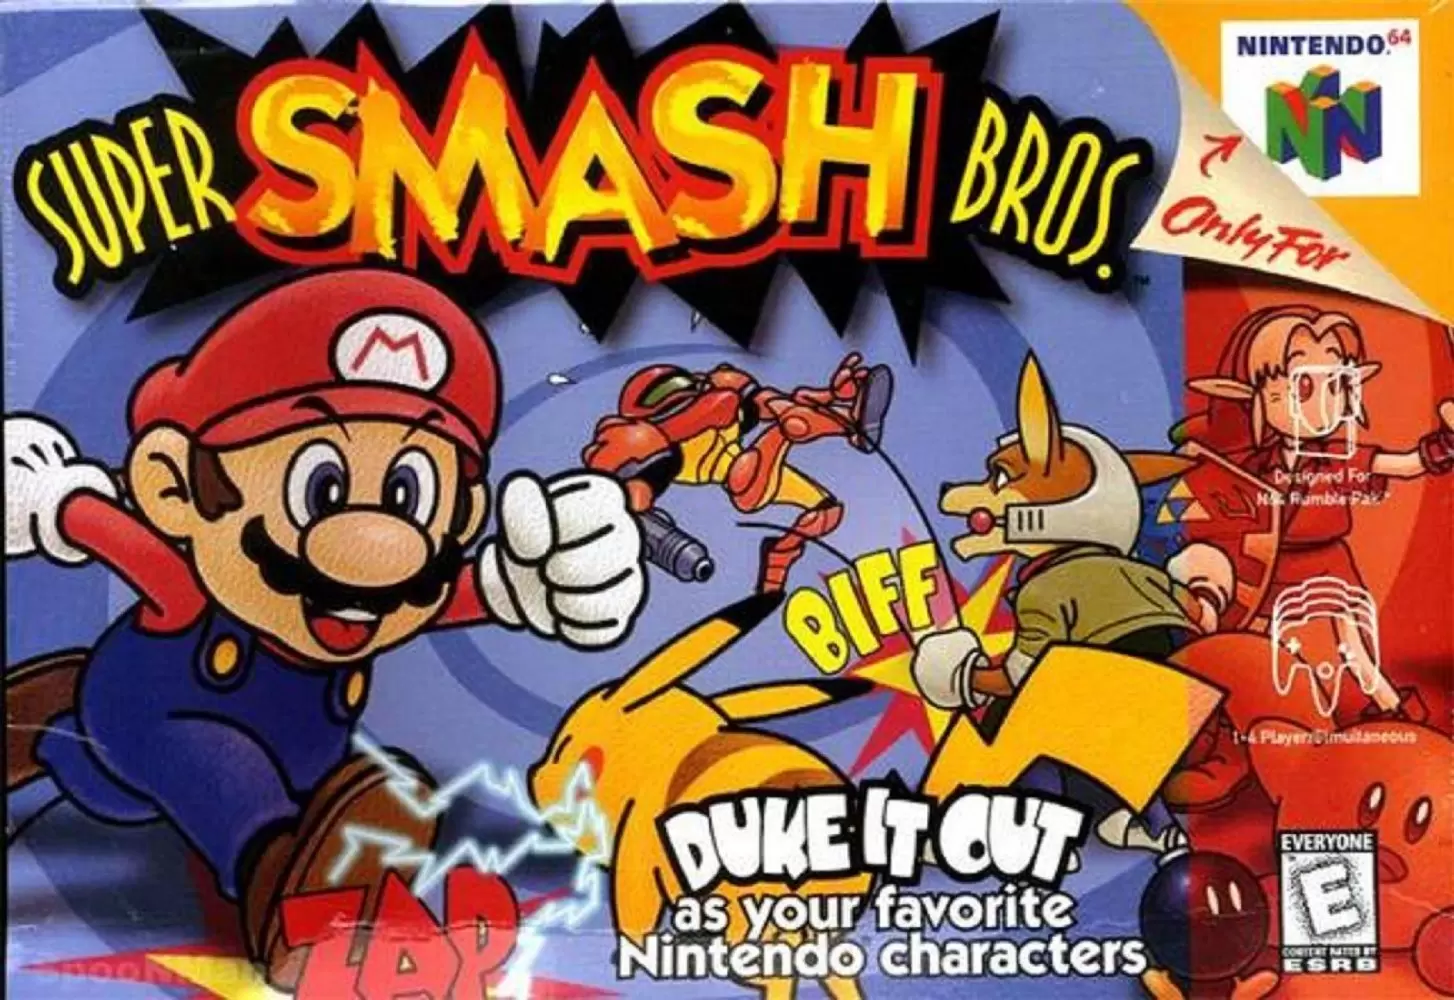 Nintendo 64 Games - Super Smash Bros.